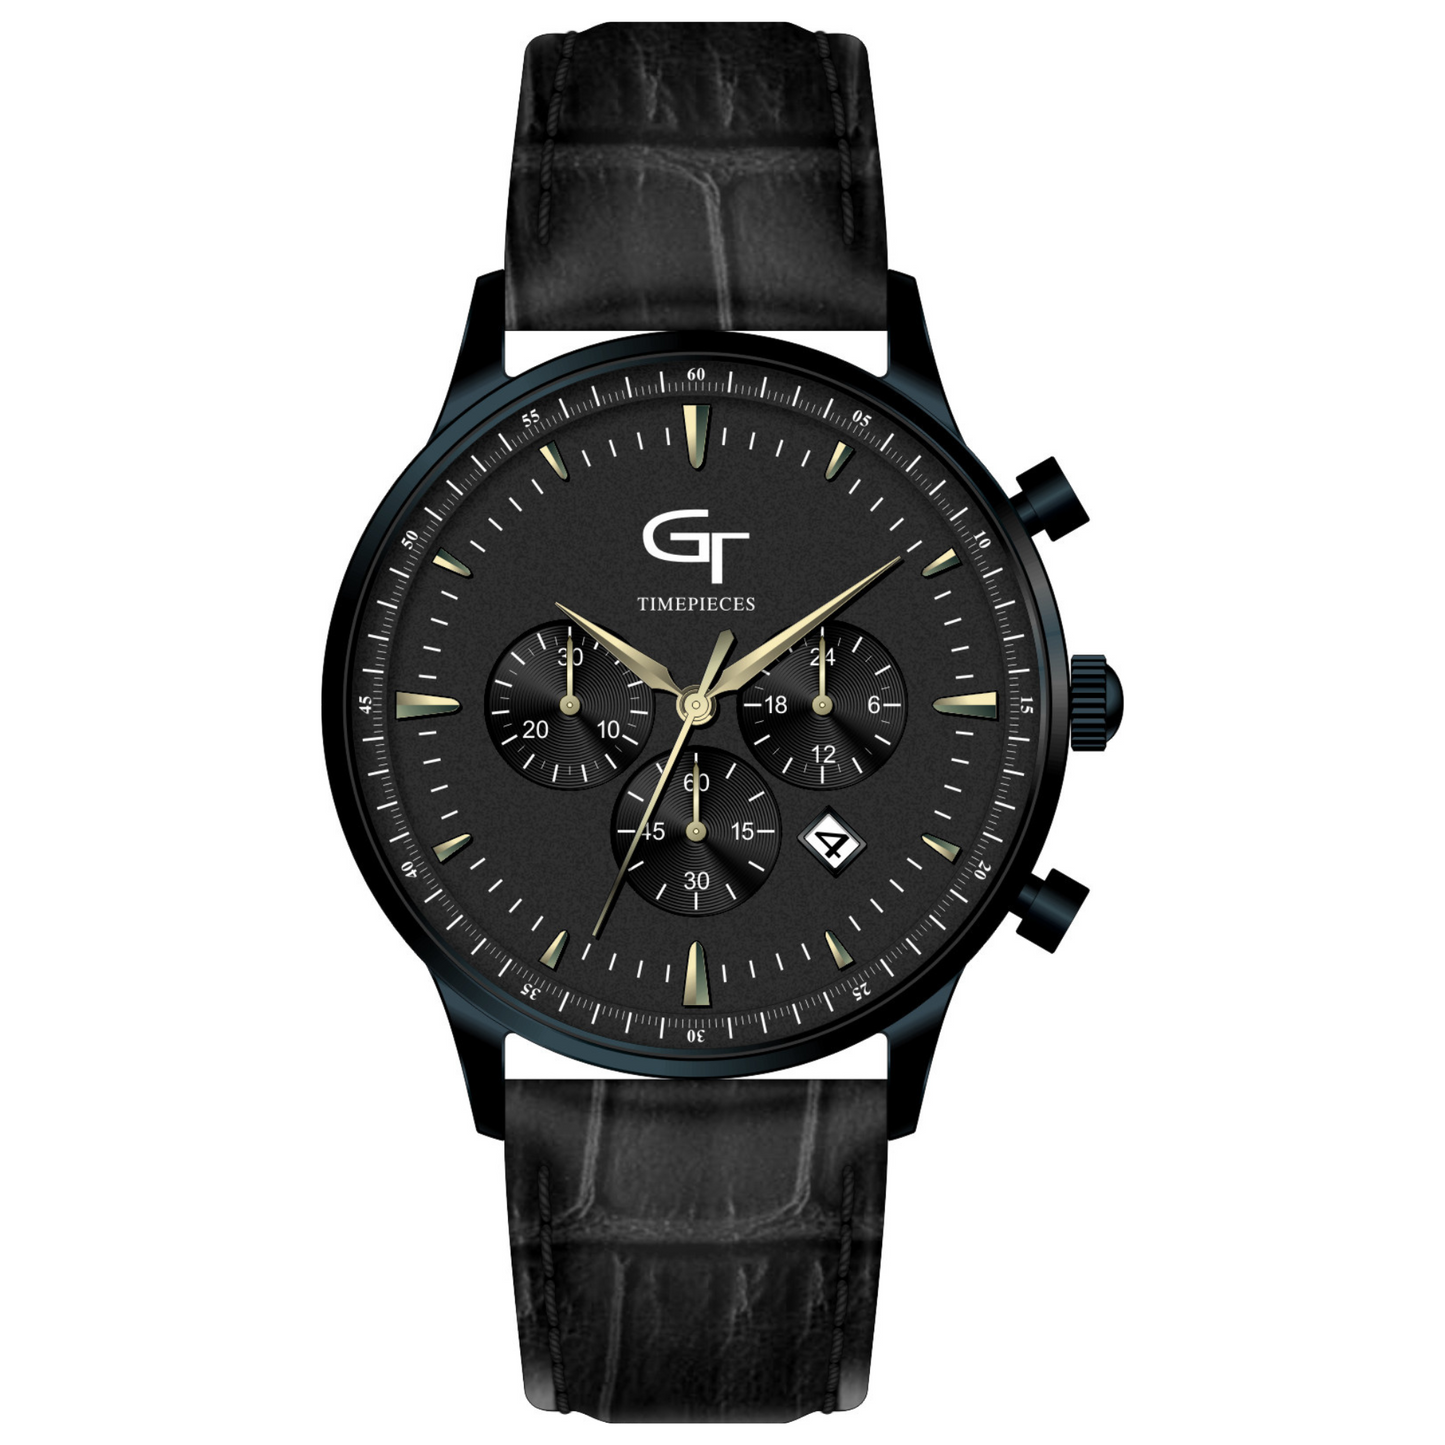 Men's Watch - Black Leather Strap - Black Watch Face